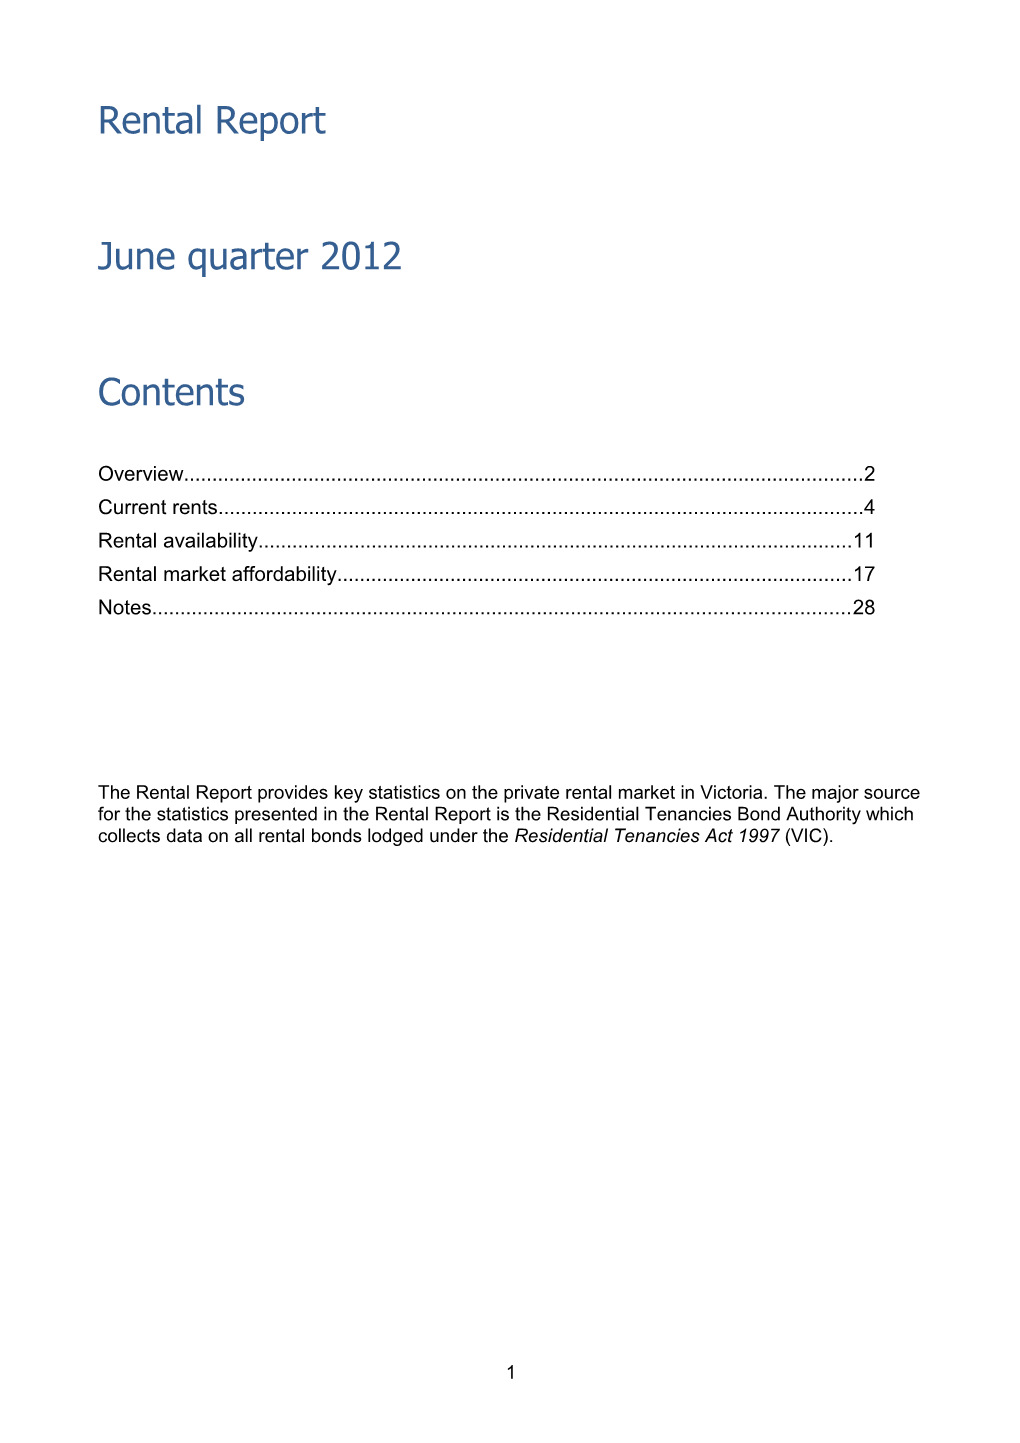 Rental Report June Quarter 2012